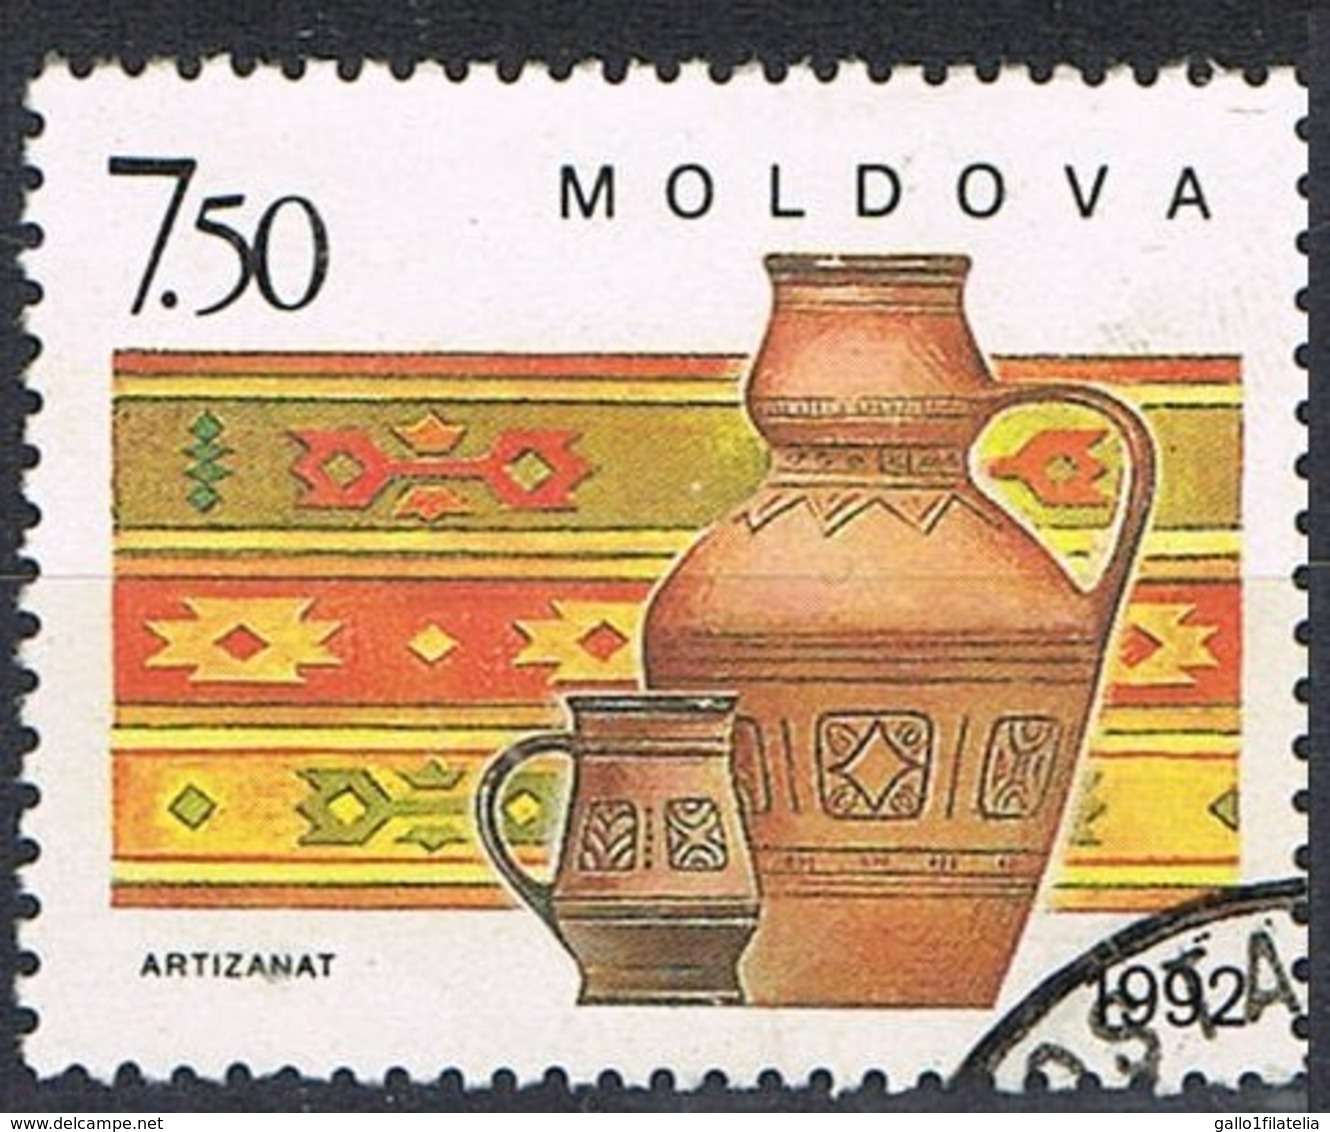 1992 - MOLDAVIA / MOLDOVA - ARTIGIANATO / HANDICRAFT - USATO / USED - Moldova